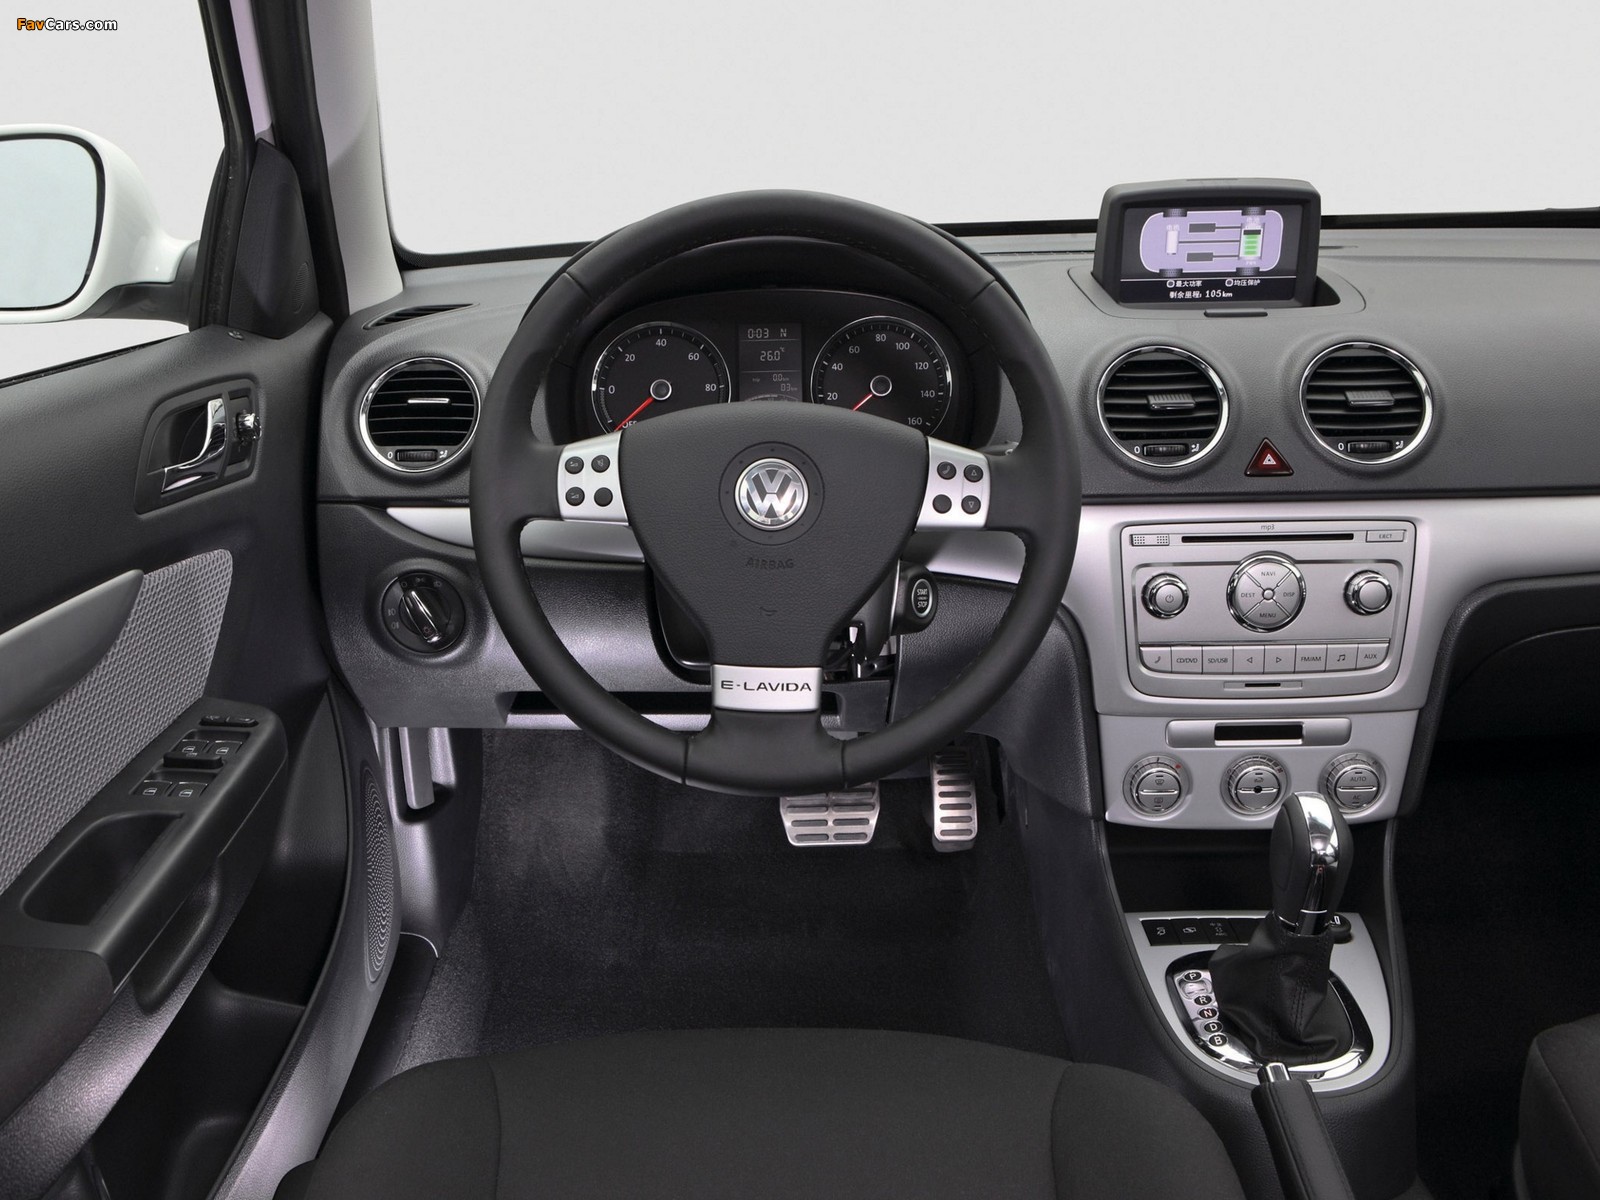 Volkswagen E-Lavida Concept 2010 images (1600 x 1200)